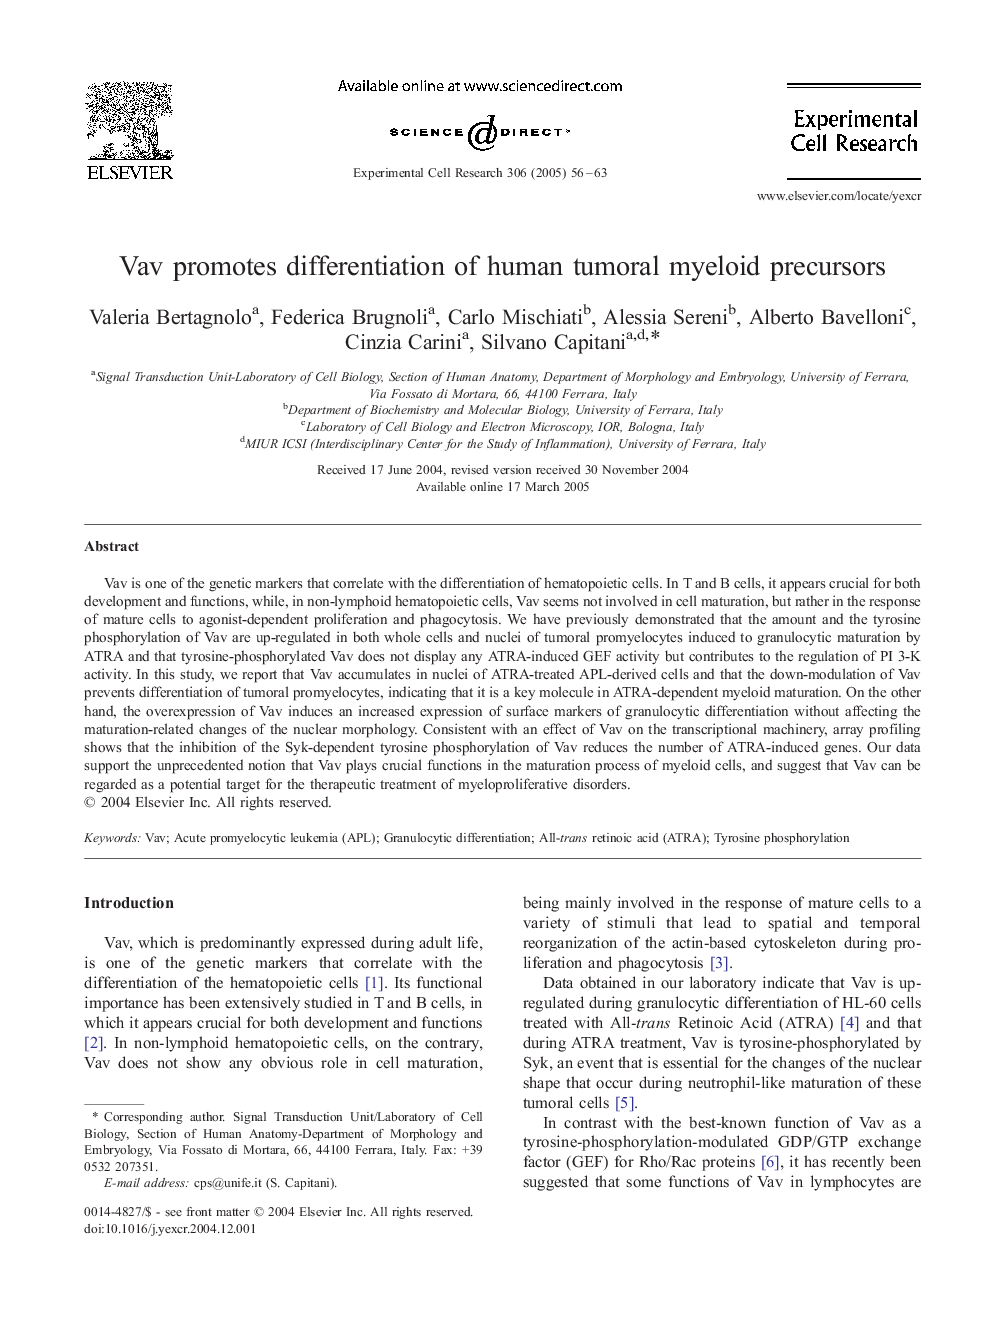 Vav promotes differentiation of human tumoral myeloid precursors